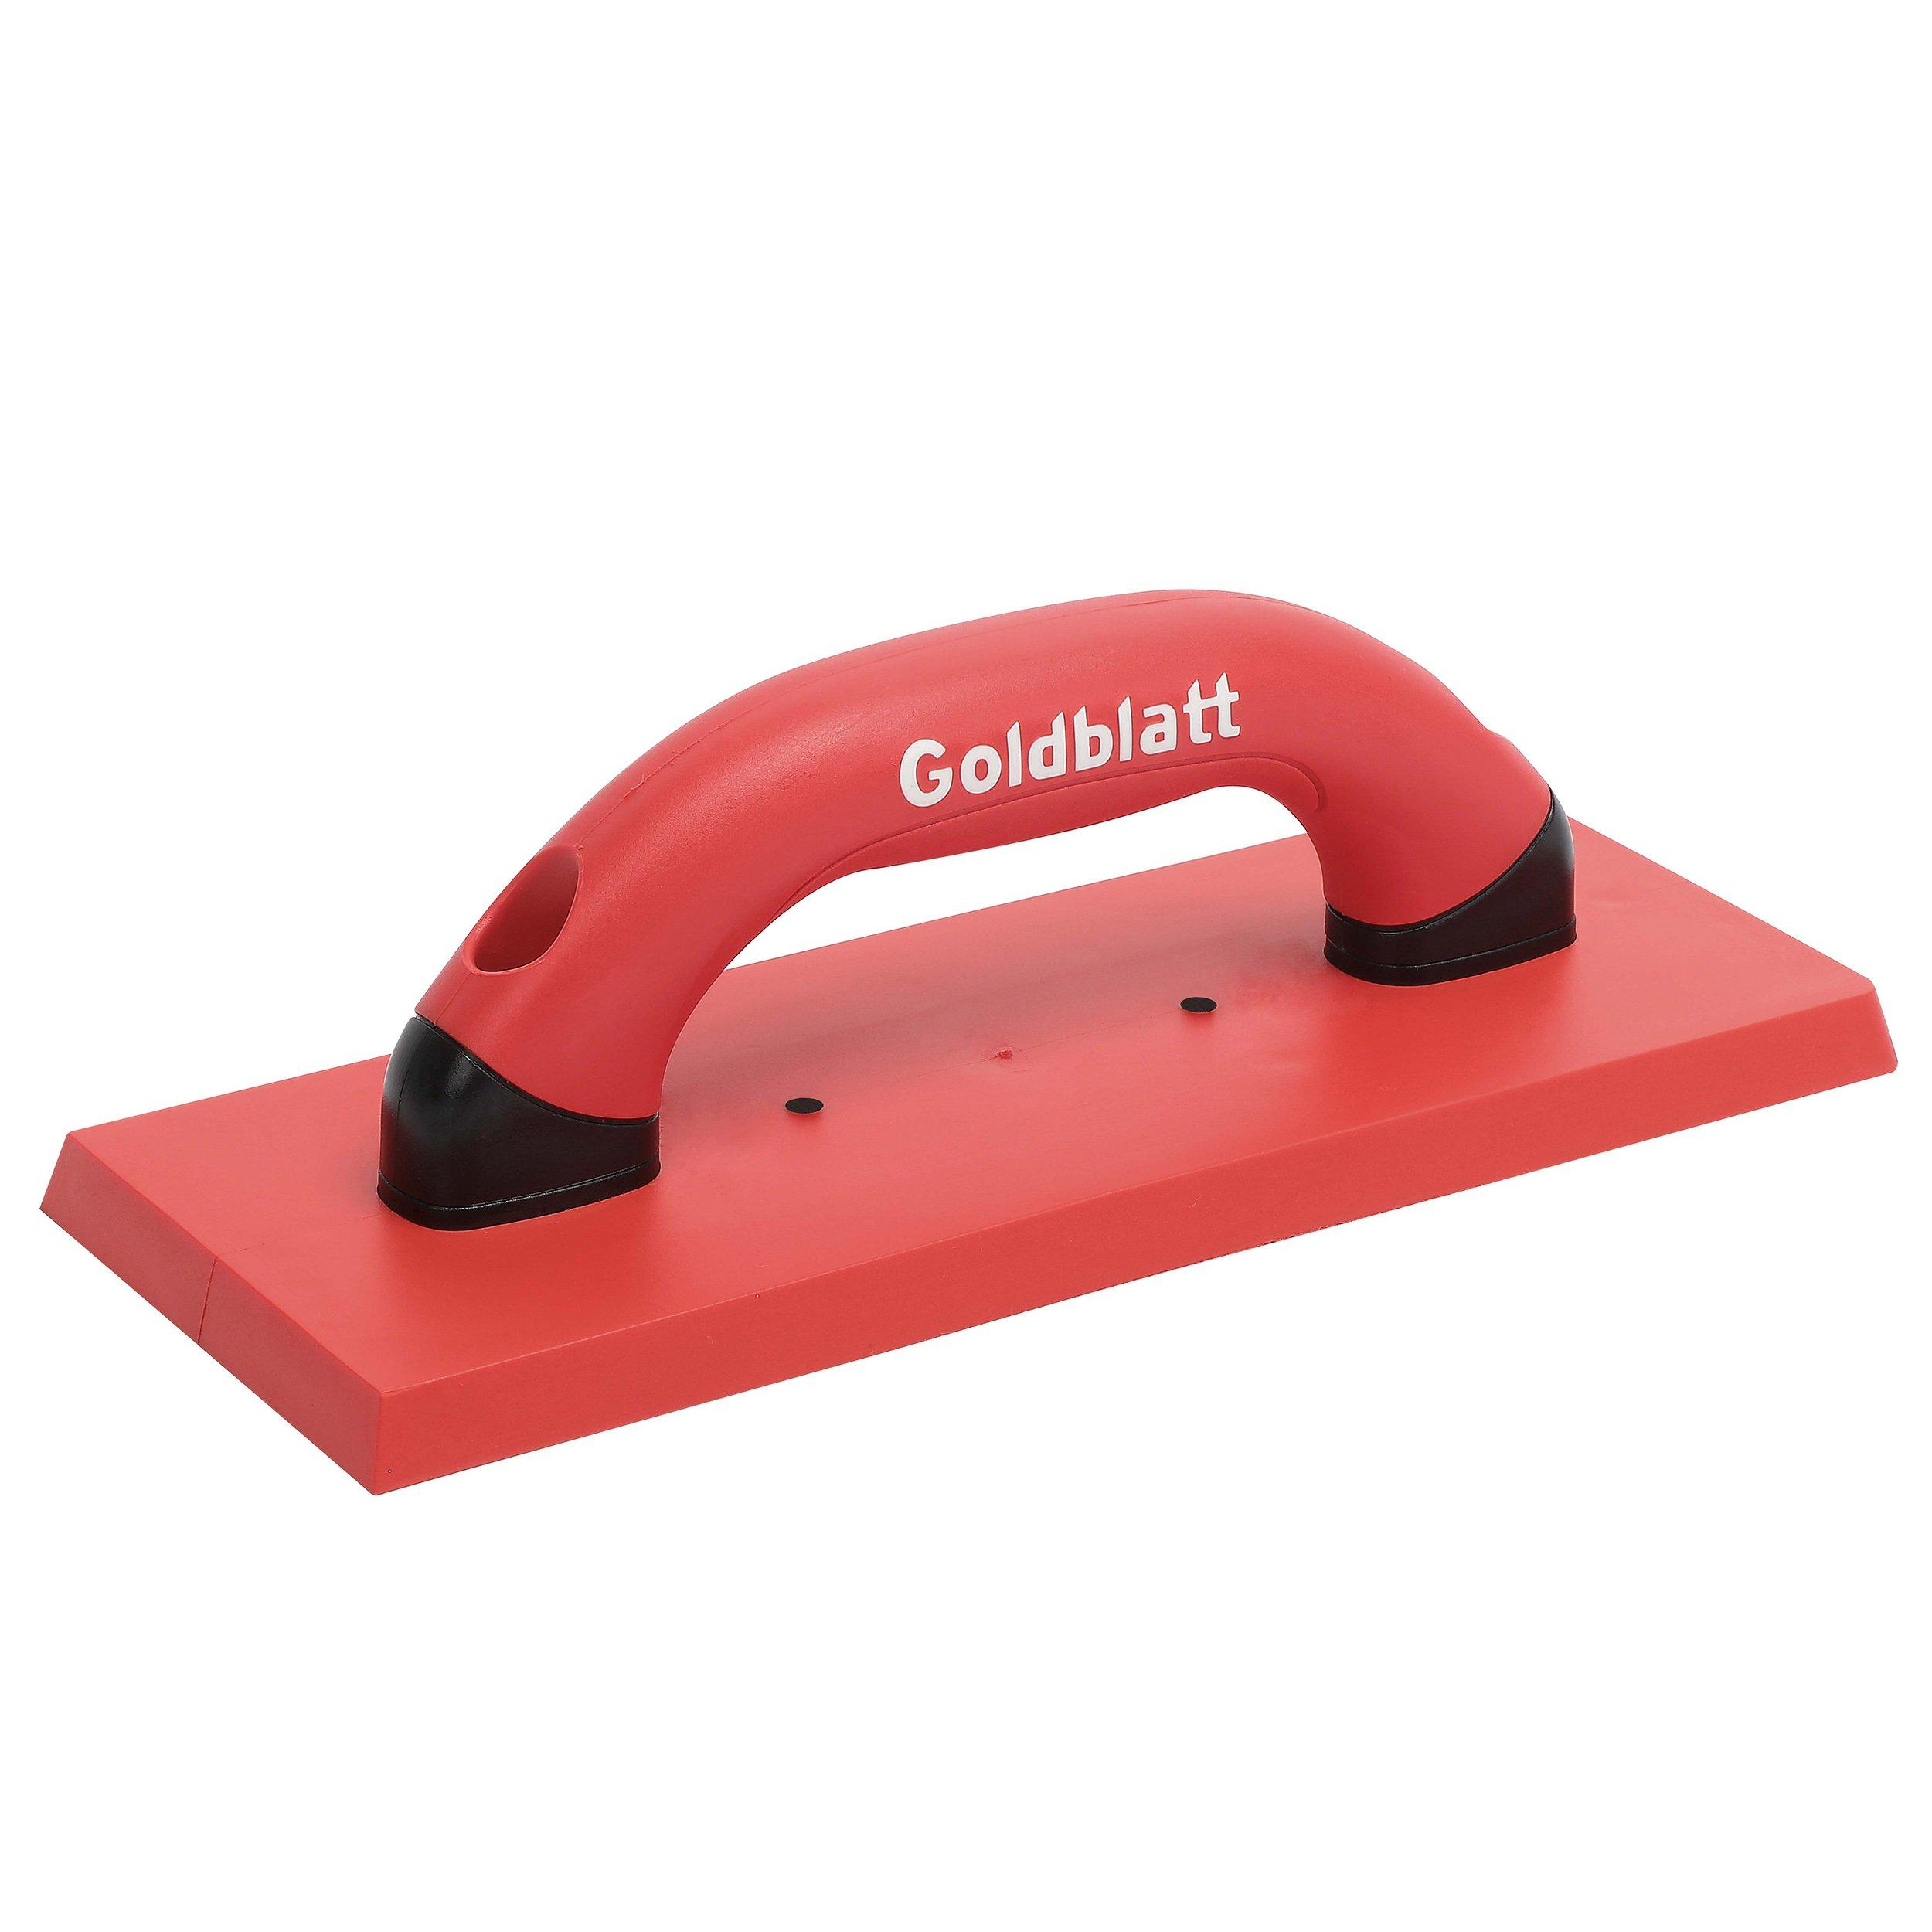 Goldblatt Extra Clean Grout Float